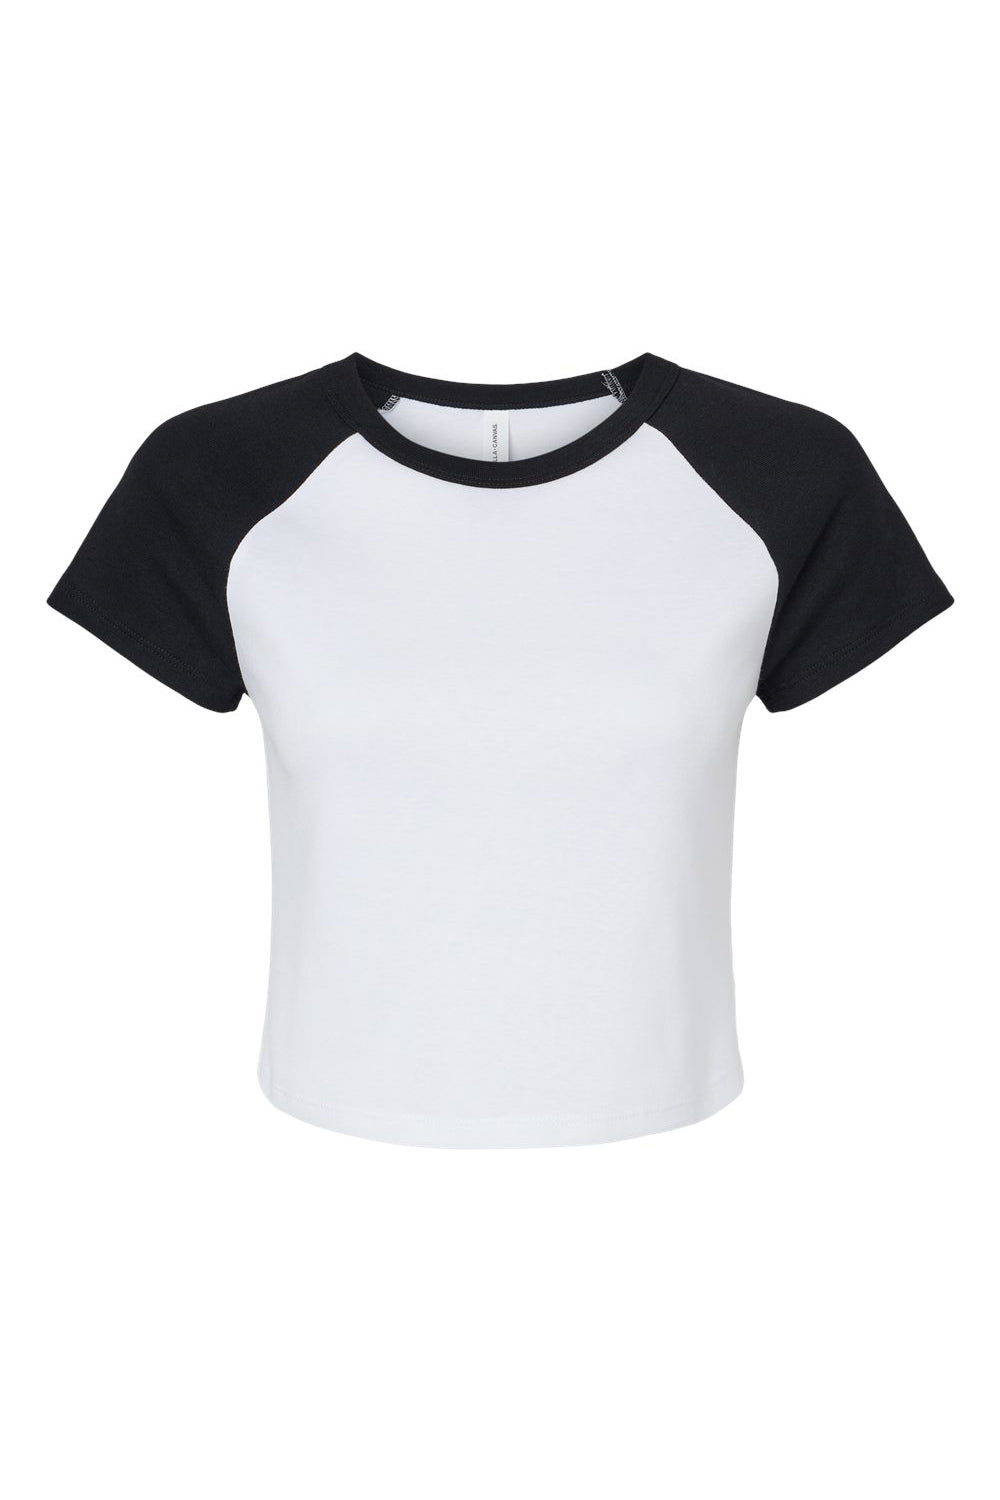 Bella + Canvas 1201 Womens Micro Ribbed Raglan Short Sleeve Crewneck Baby T-Shirt White/Black Flat Front